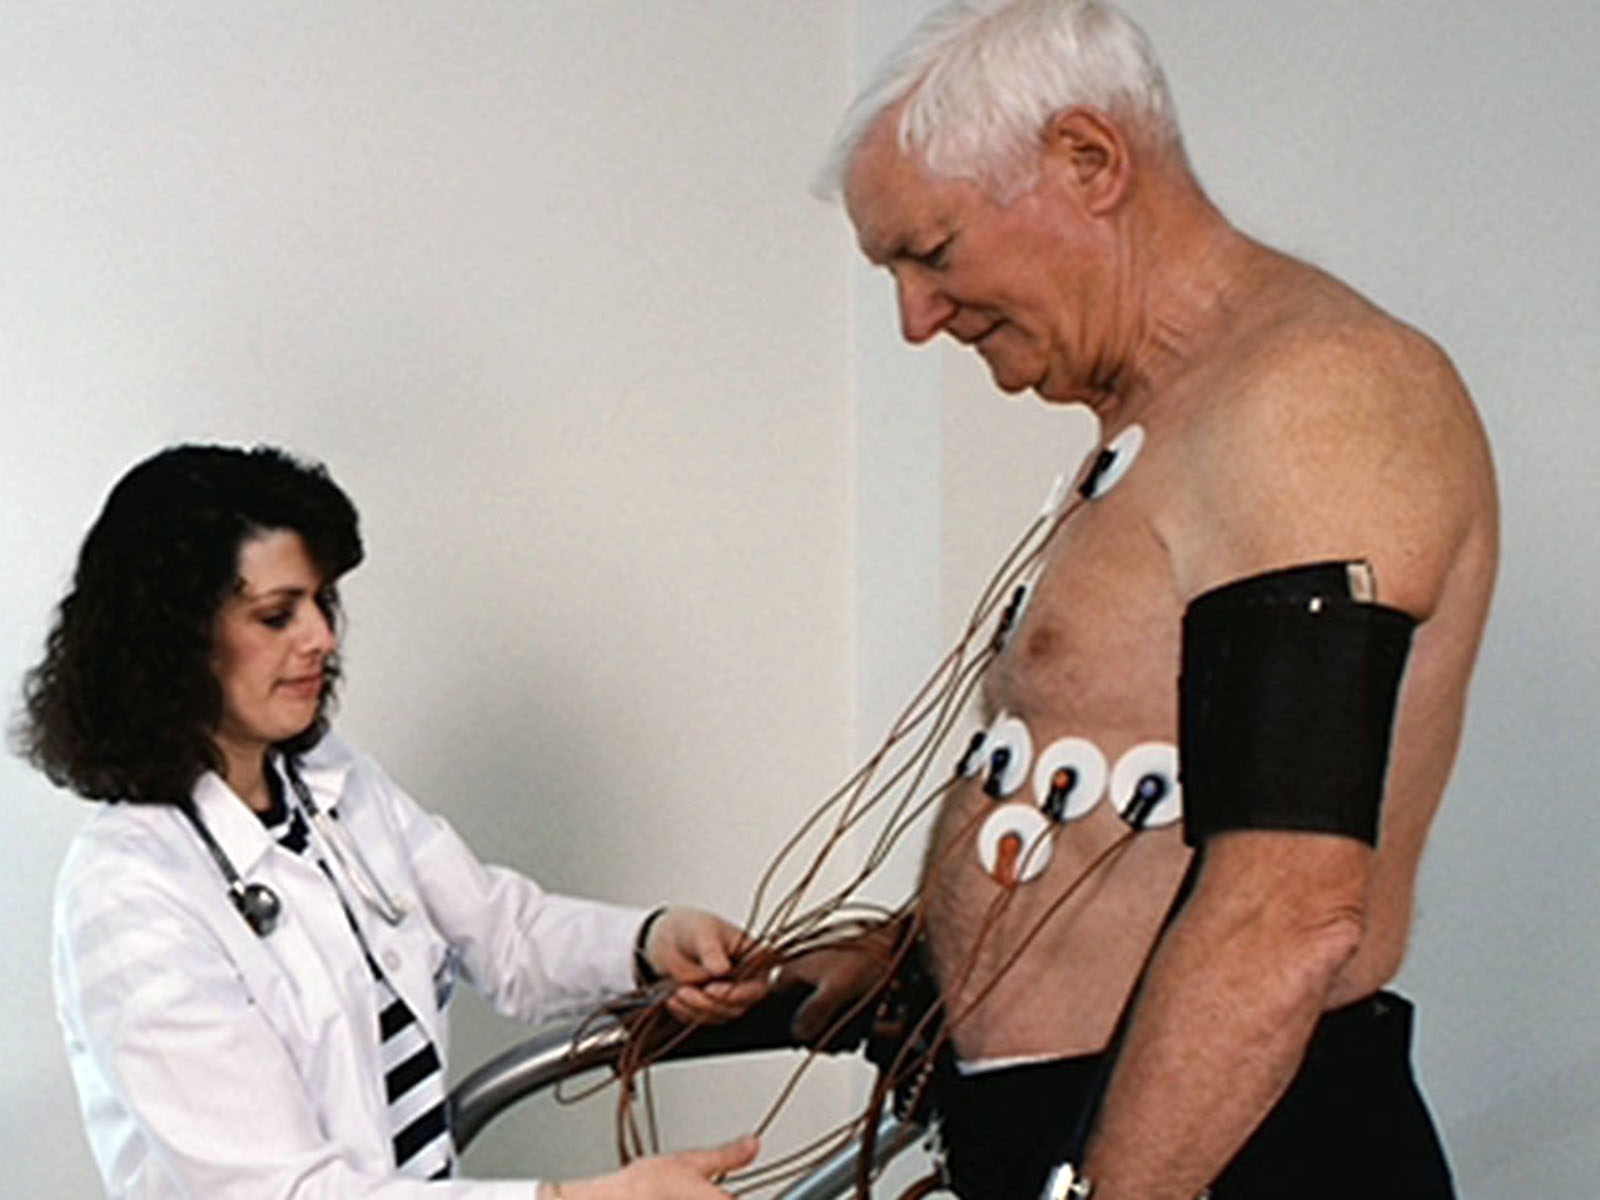 EKG technician image